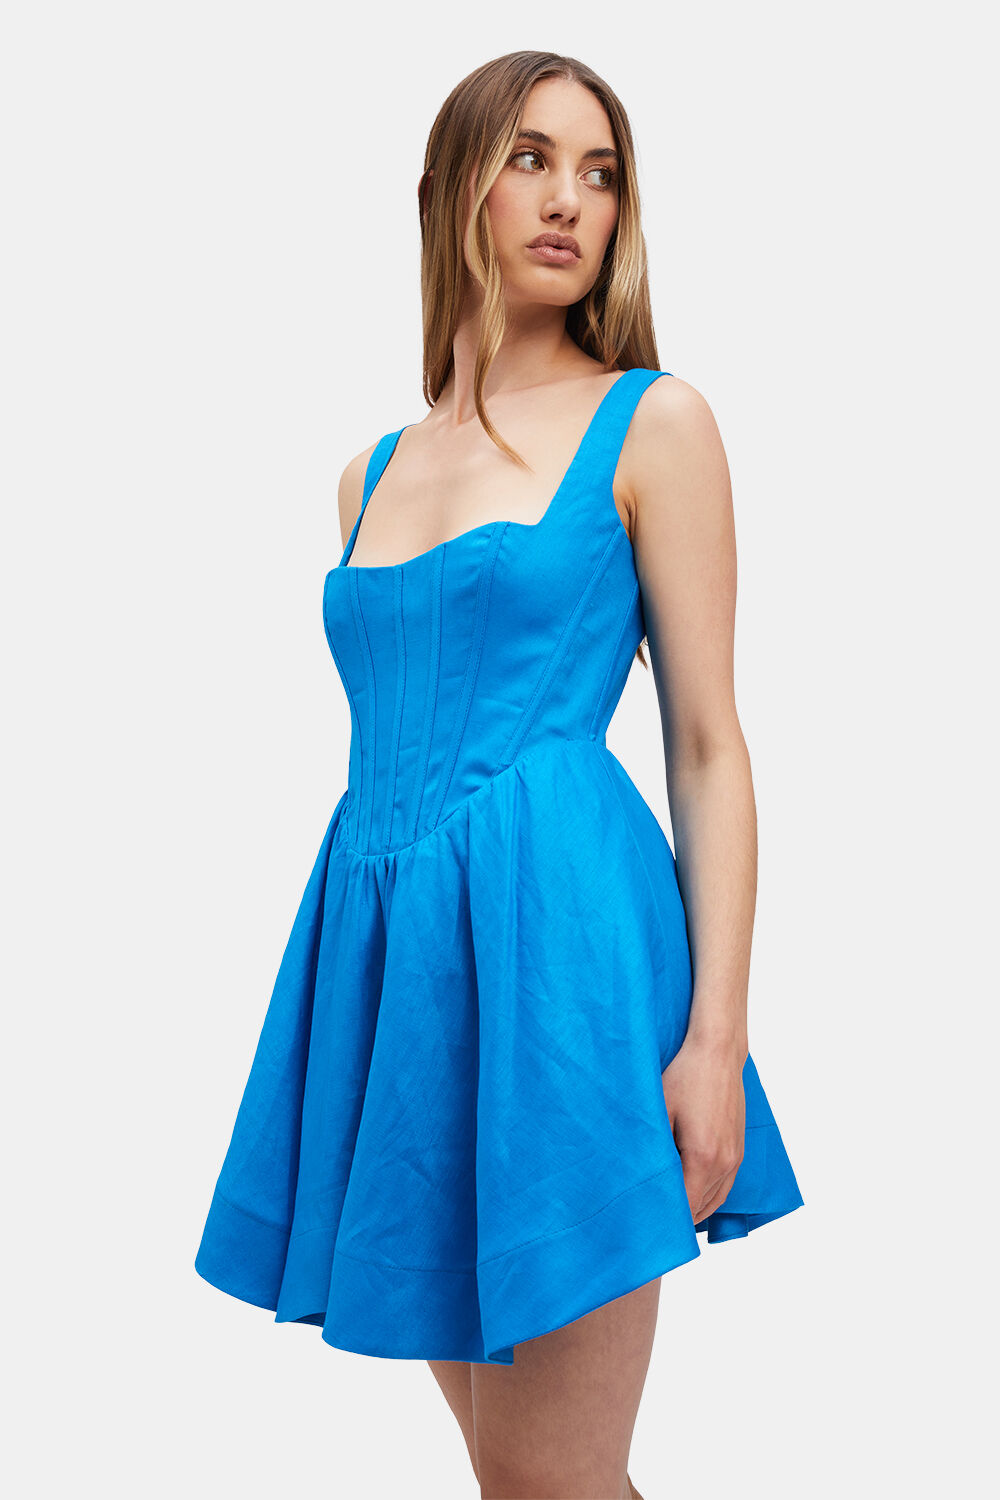 ZENAIDA CORSET MINI DRESS in colour ROYAL BLUE